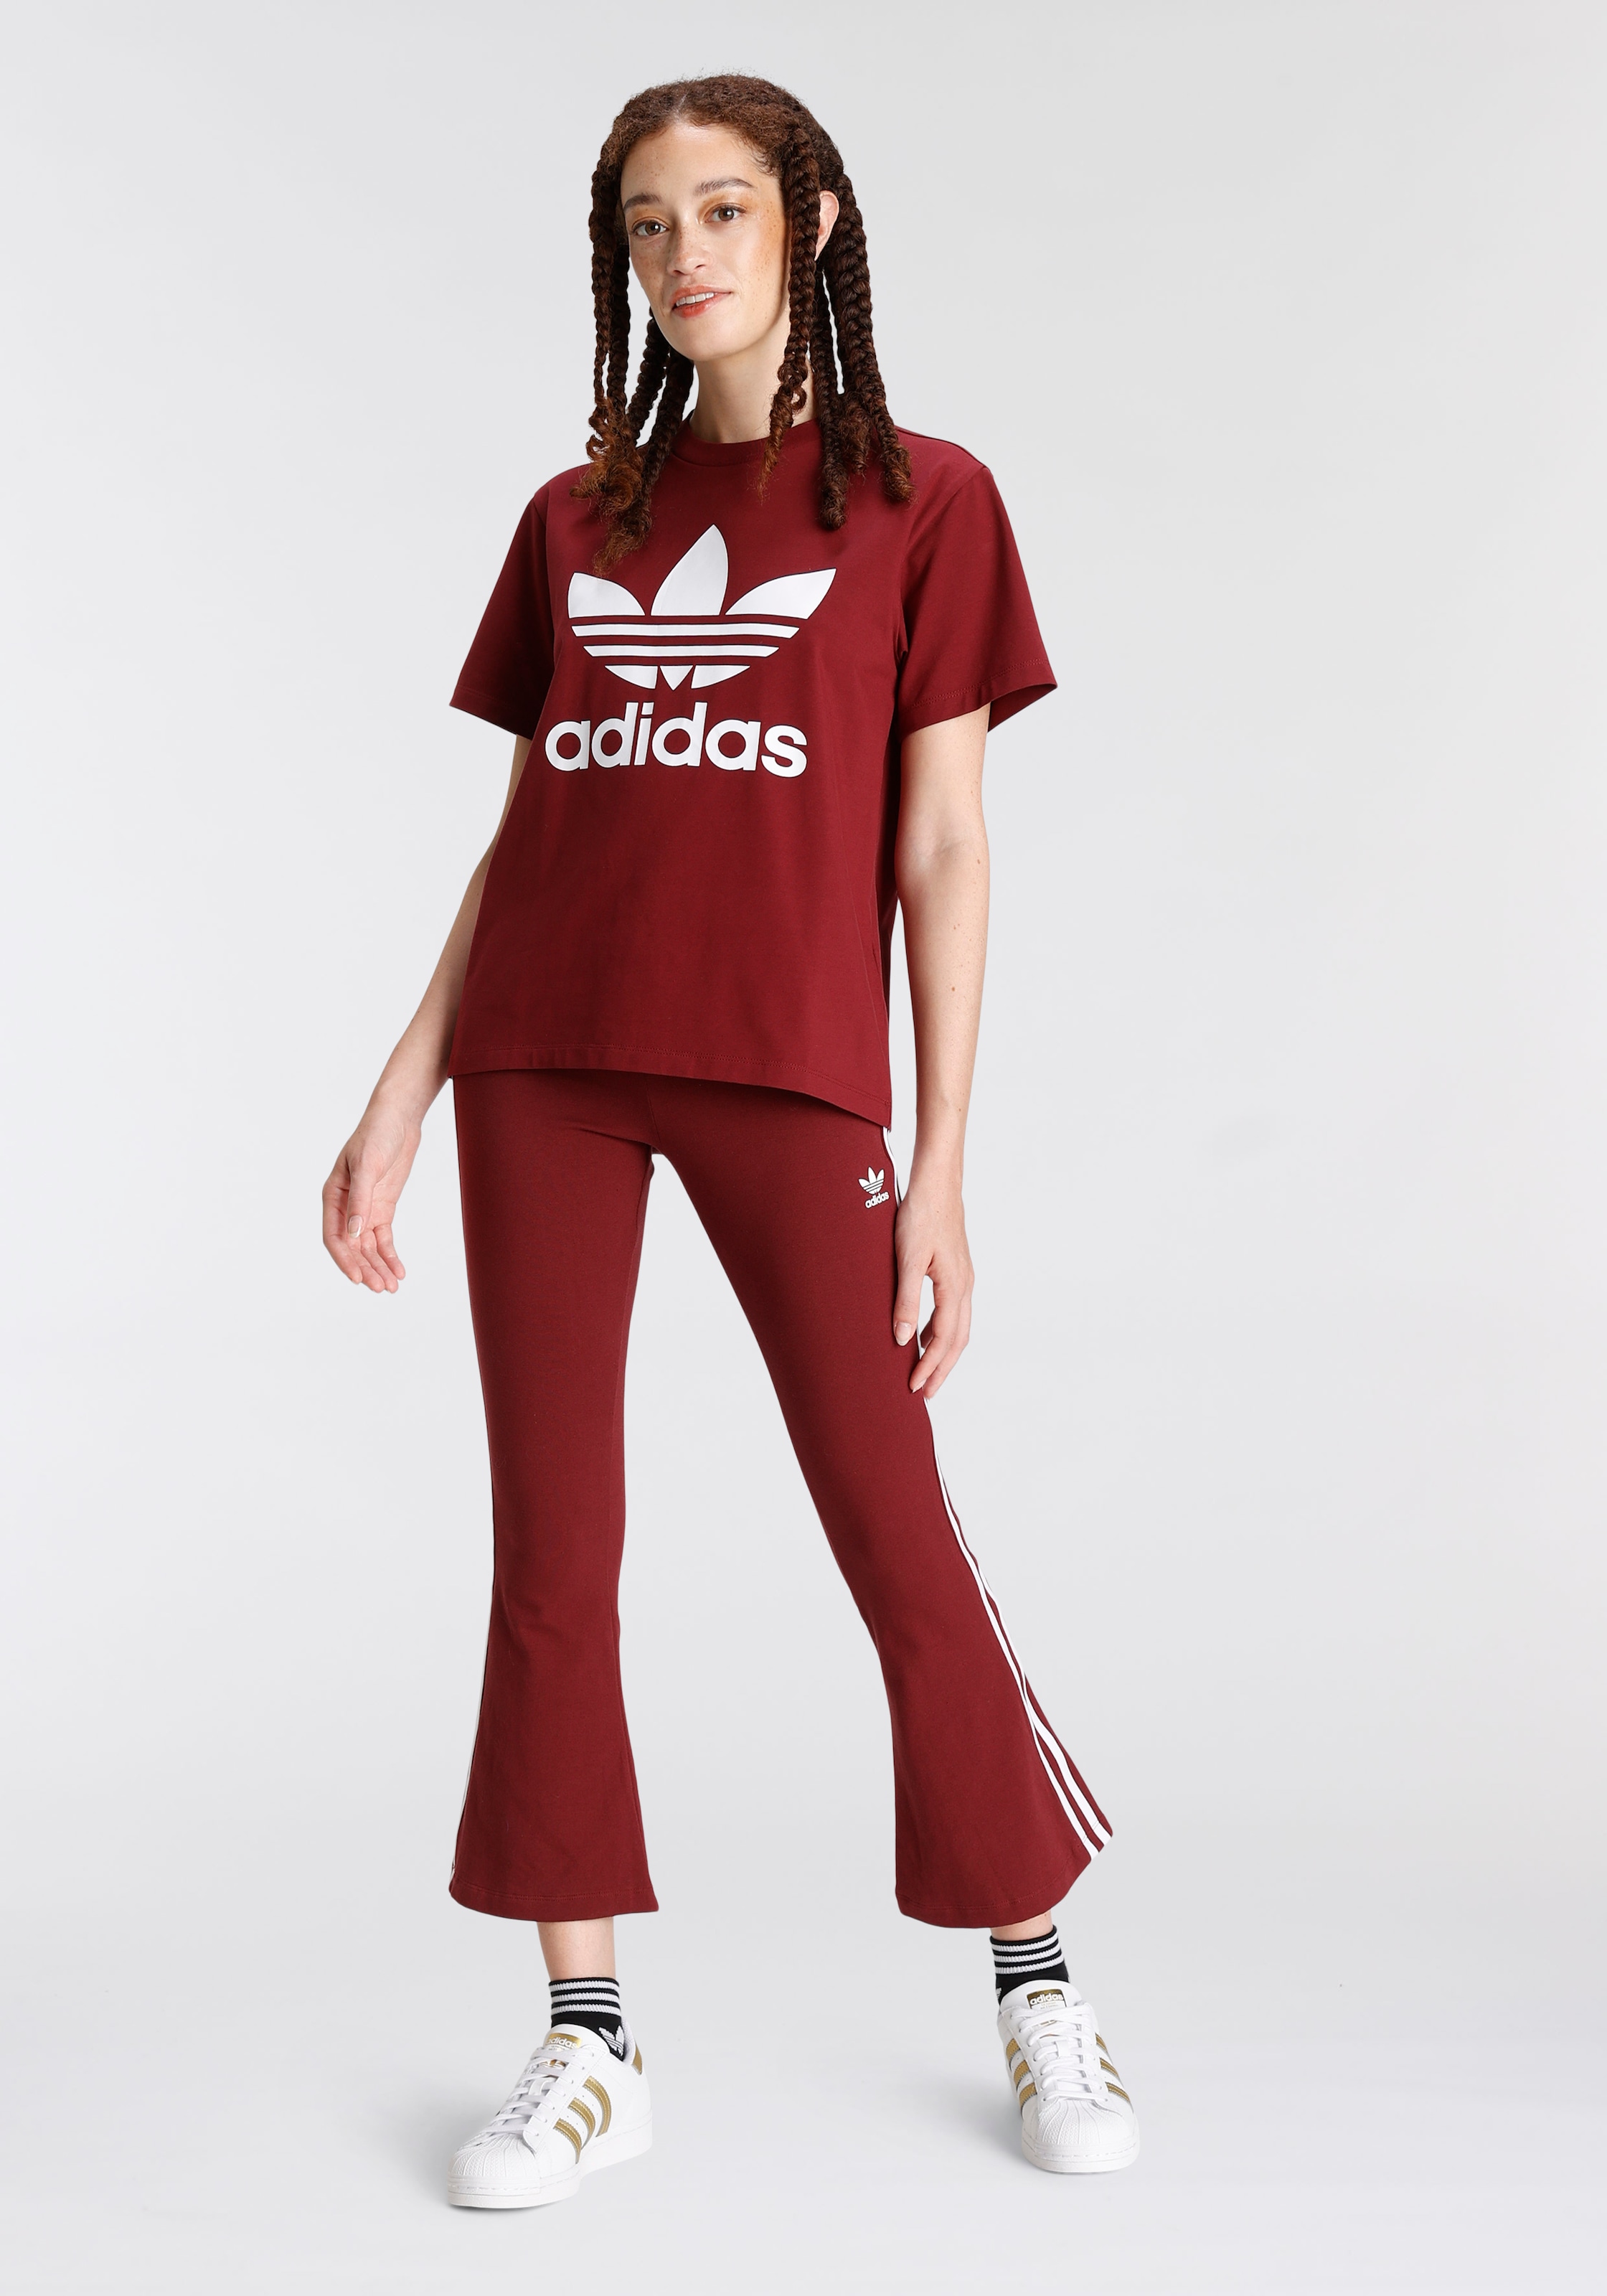 CLASSICS bestellen ♕ »ADICOLOR adidas TREFOIL« versandkostenfrei T-Shirt Originals